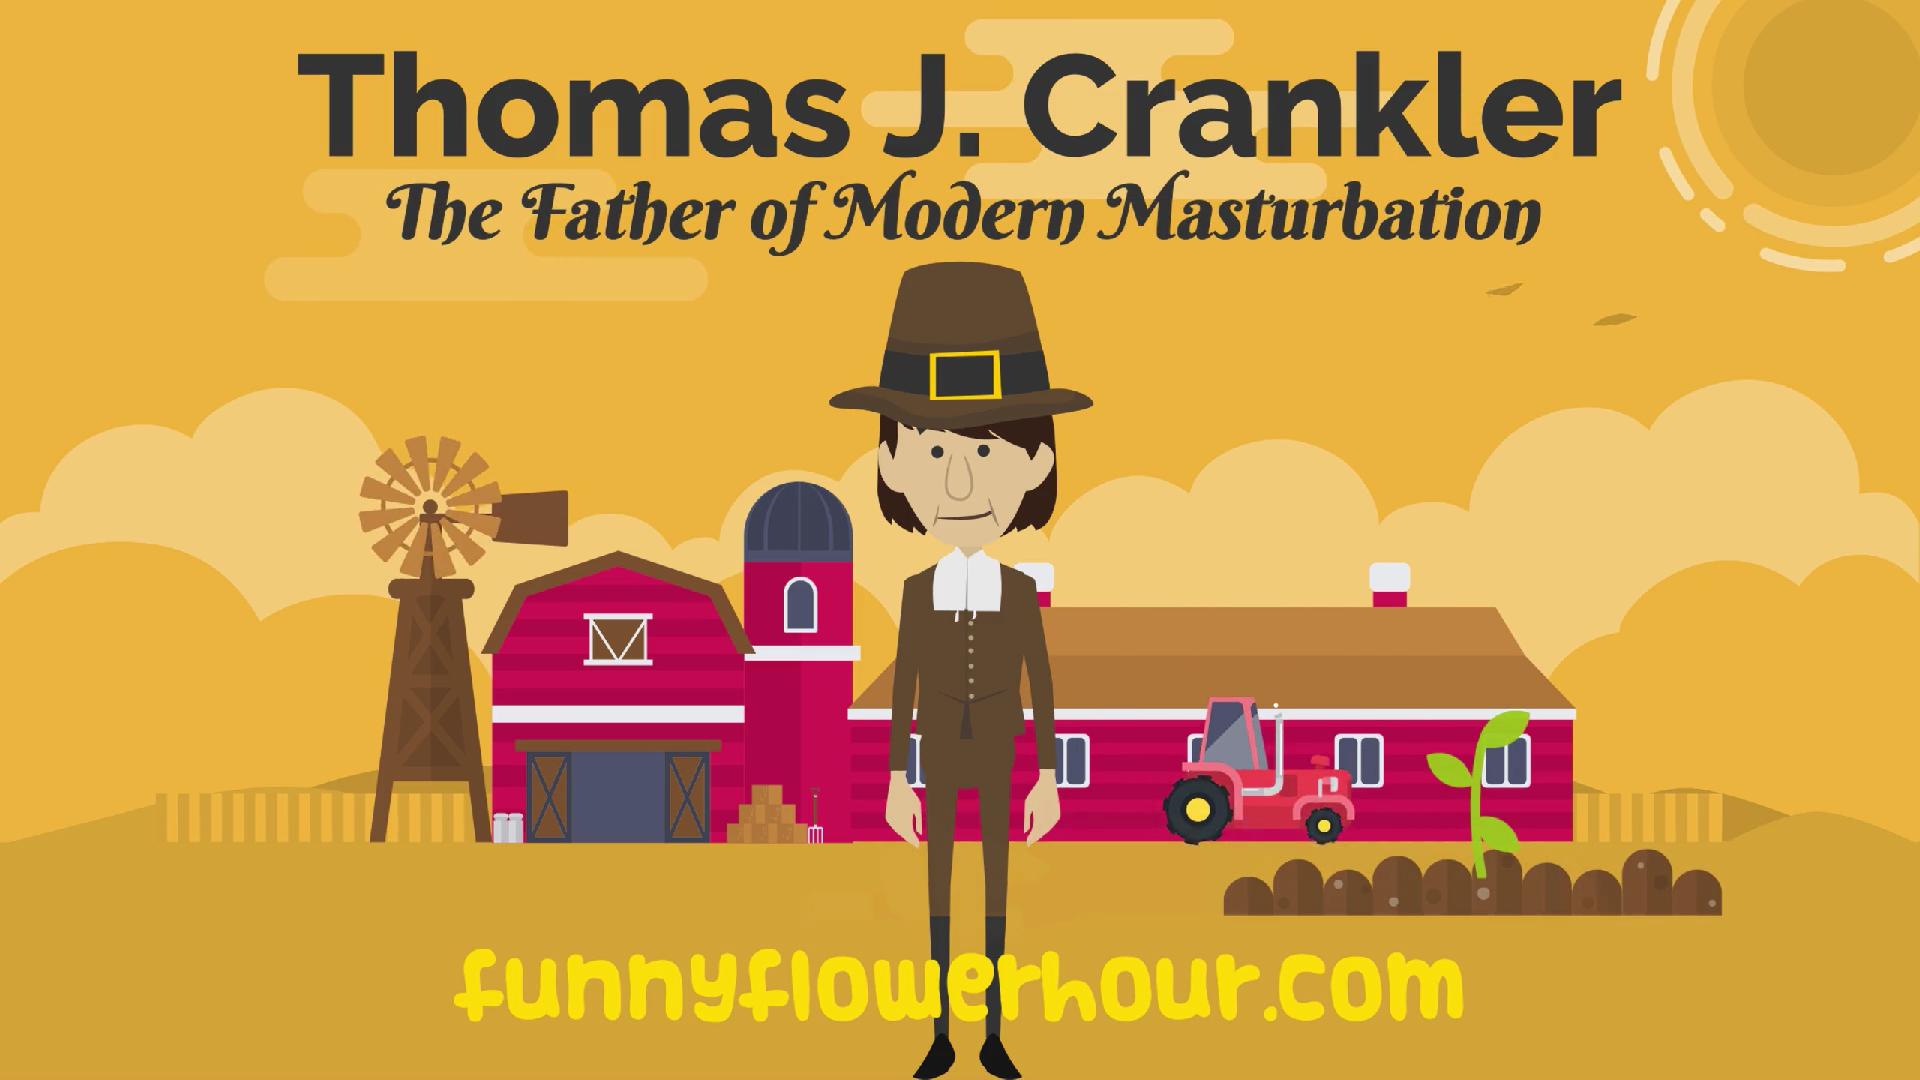 Thomas J. Crankler: The Father of Modern Masturbation